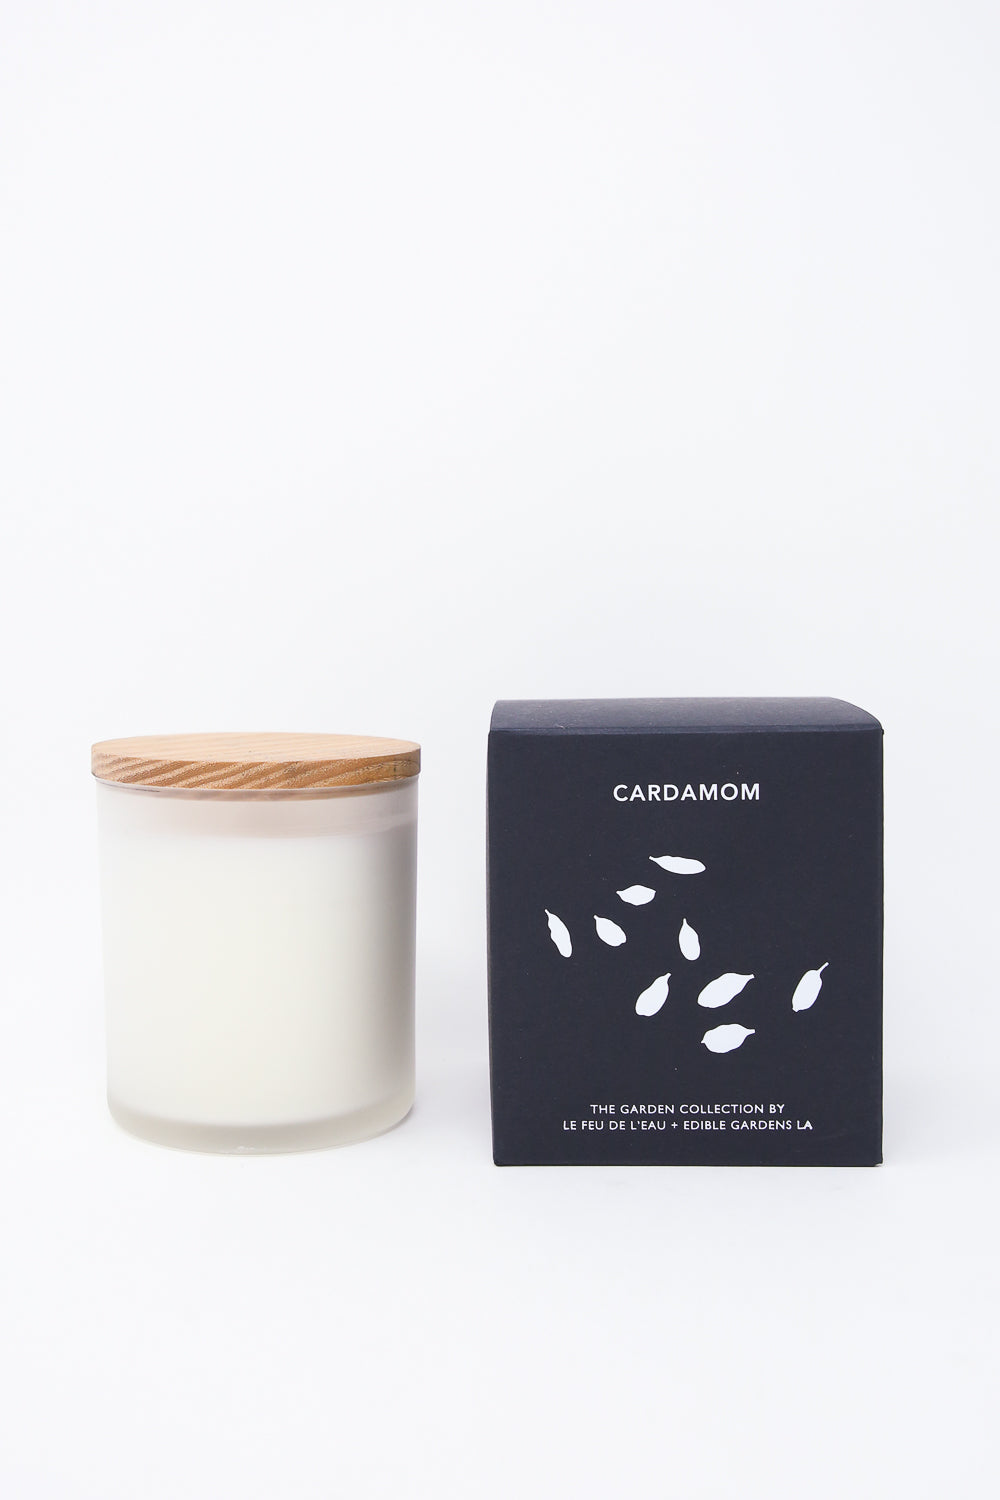 Le Feu De L'Eau Garden Candle in Cardamom